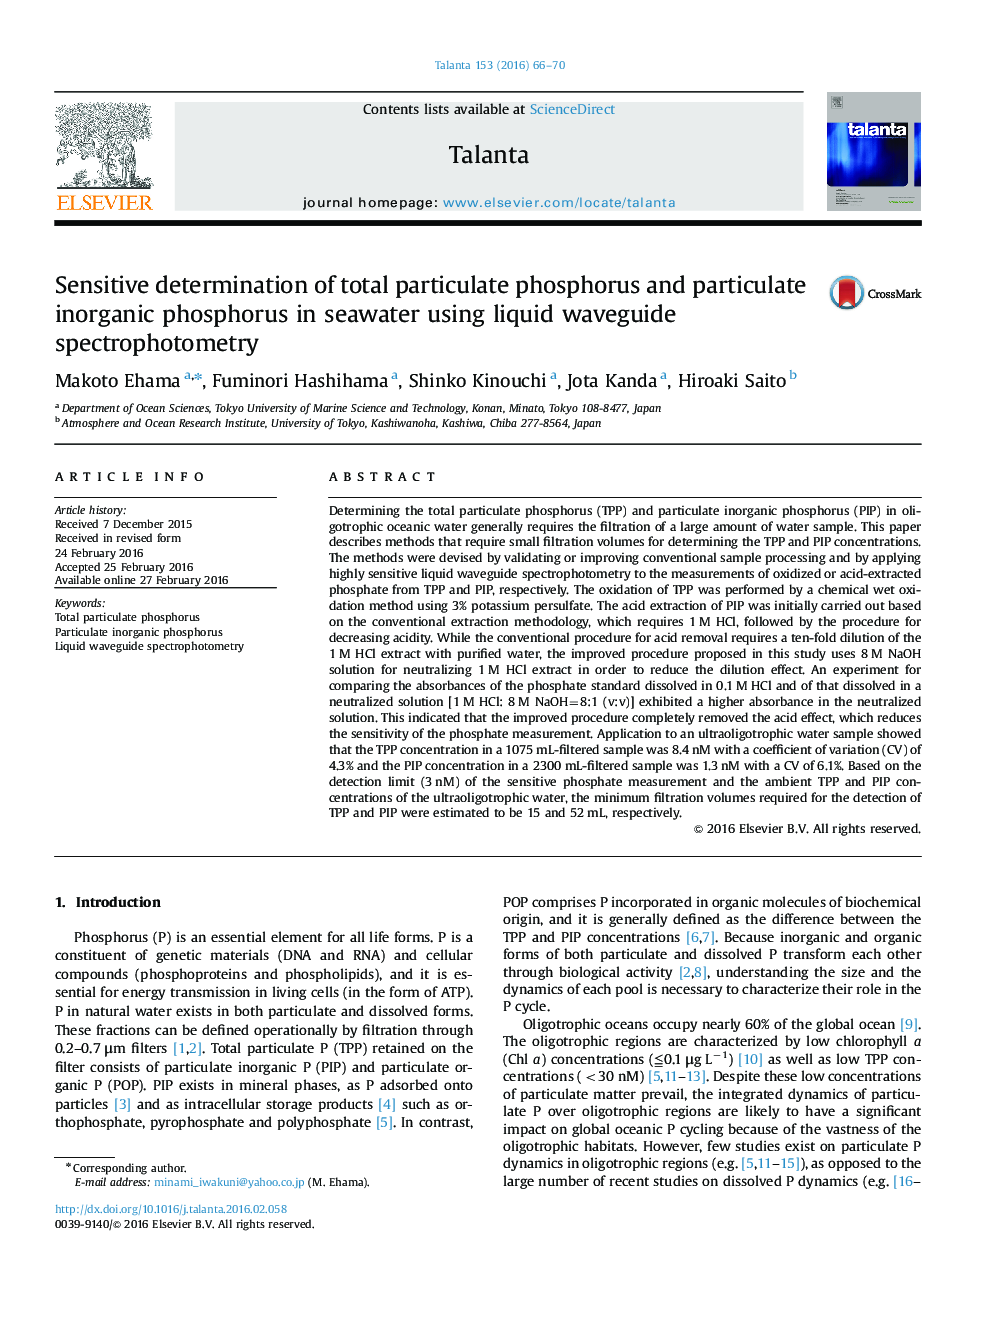 Sensitive determination of total particulate phosphorus and particulate inorganic phosphorus in seawater using liquid waveguide spectrophotometry